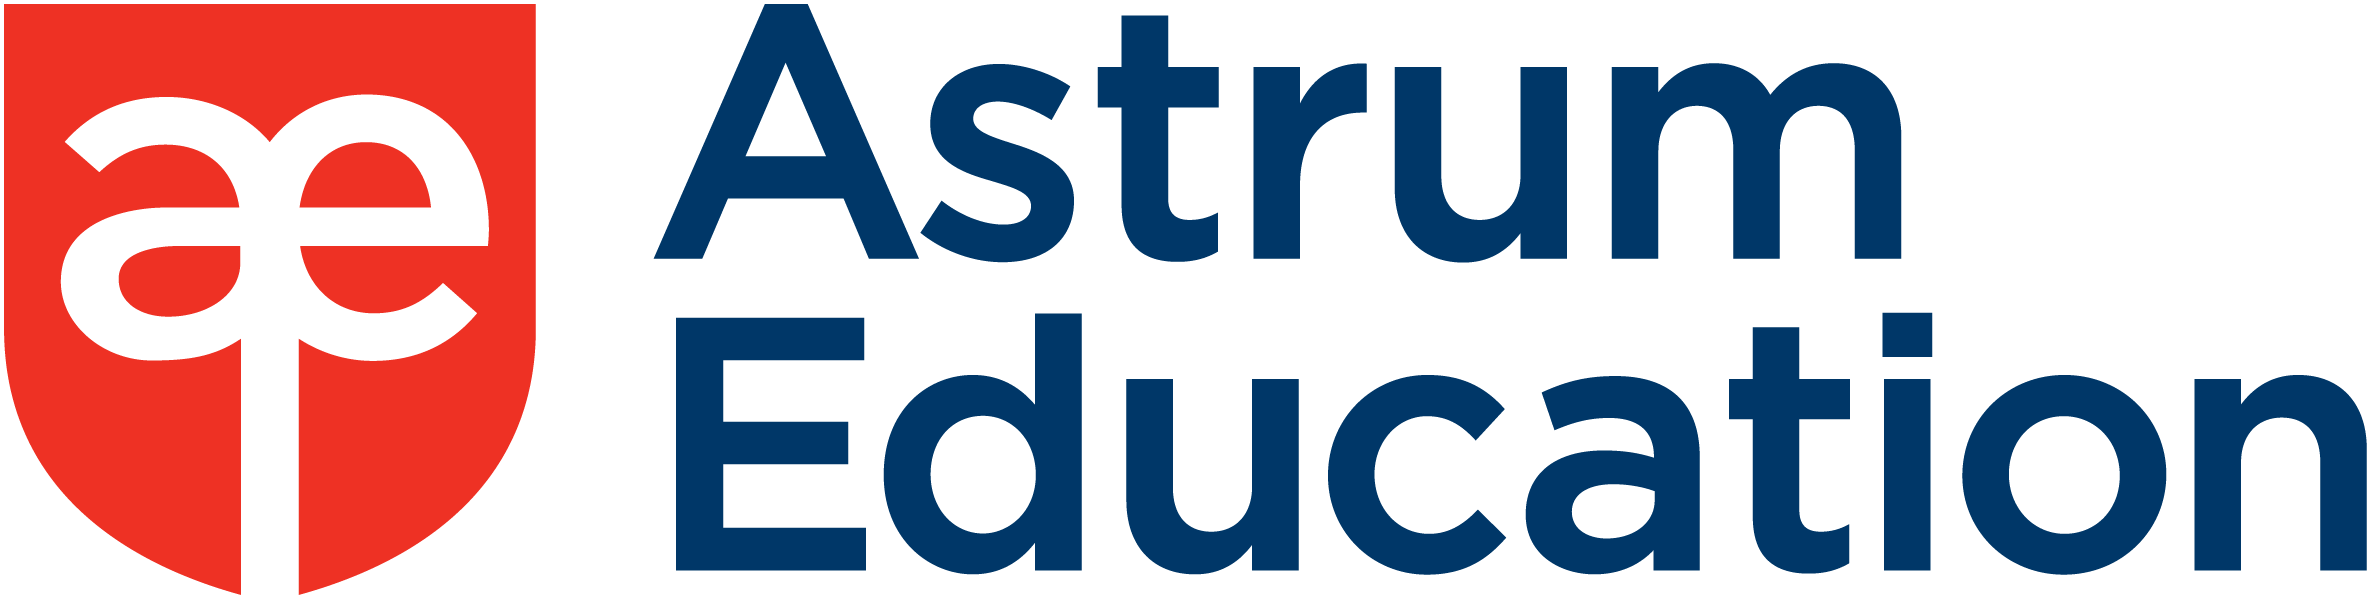 astrum-logo-red-blue-01.png